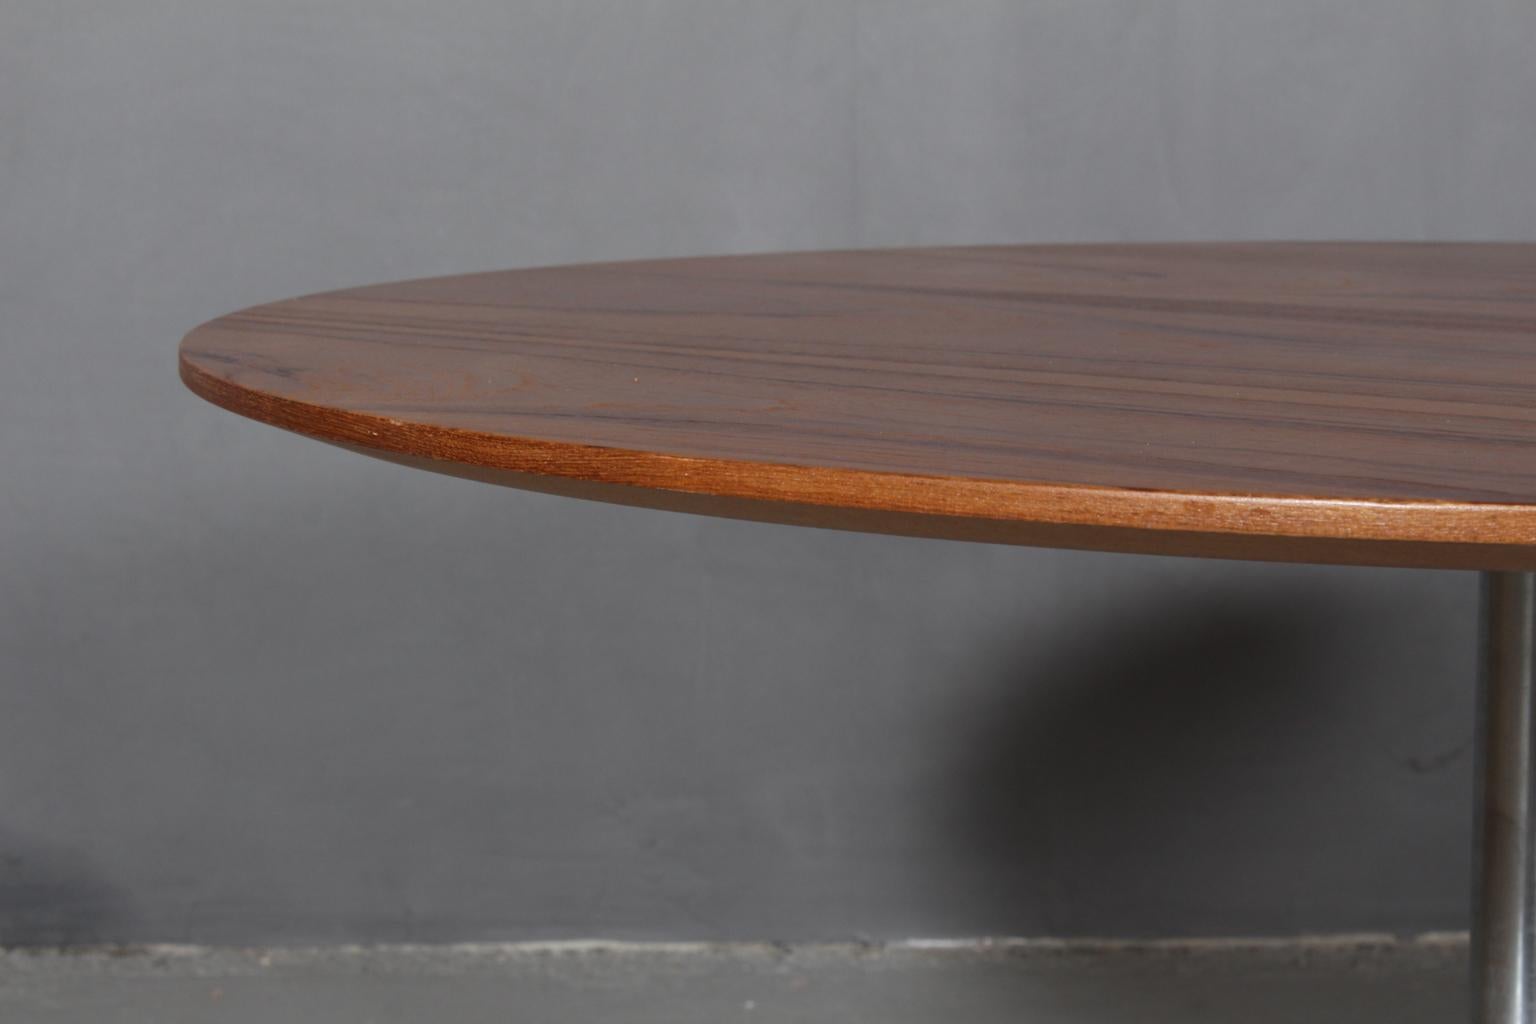 Piet Hein & Arne Jacobsen, Coffee Table In Excellent Condition For Sale In Esbjerg, DK